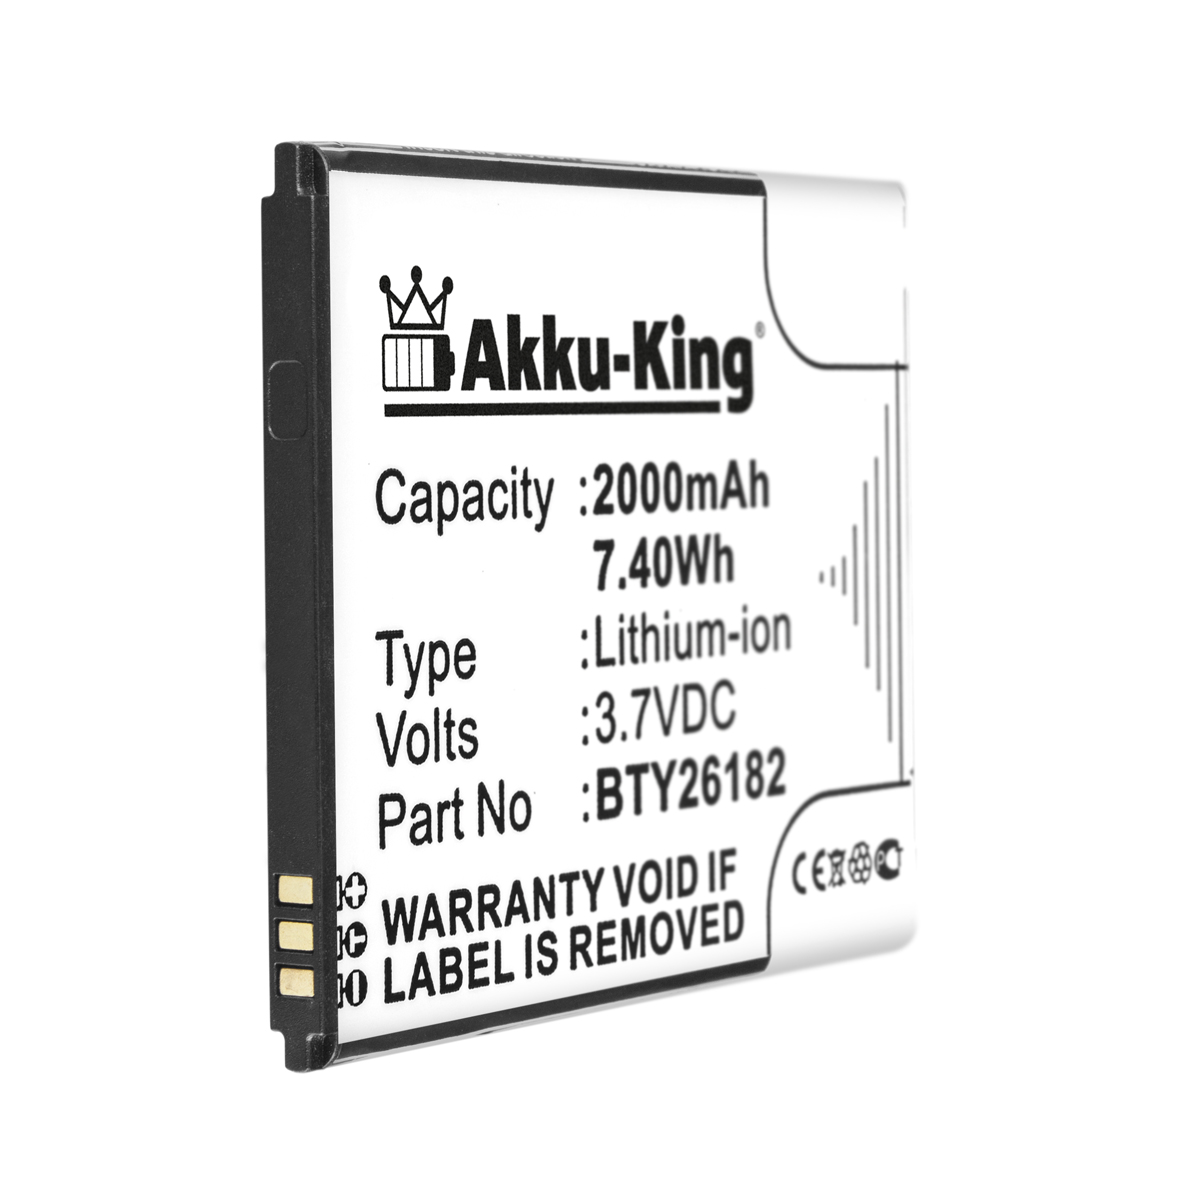 Mobistel BTY26182 2000mAh 3.7 AKKU-KING kompatibel Volt, mit Akku Handy-Akku, Li-Ion